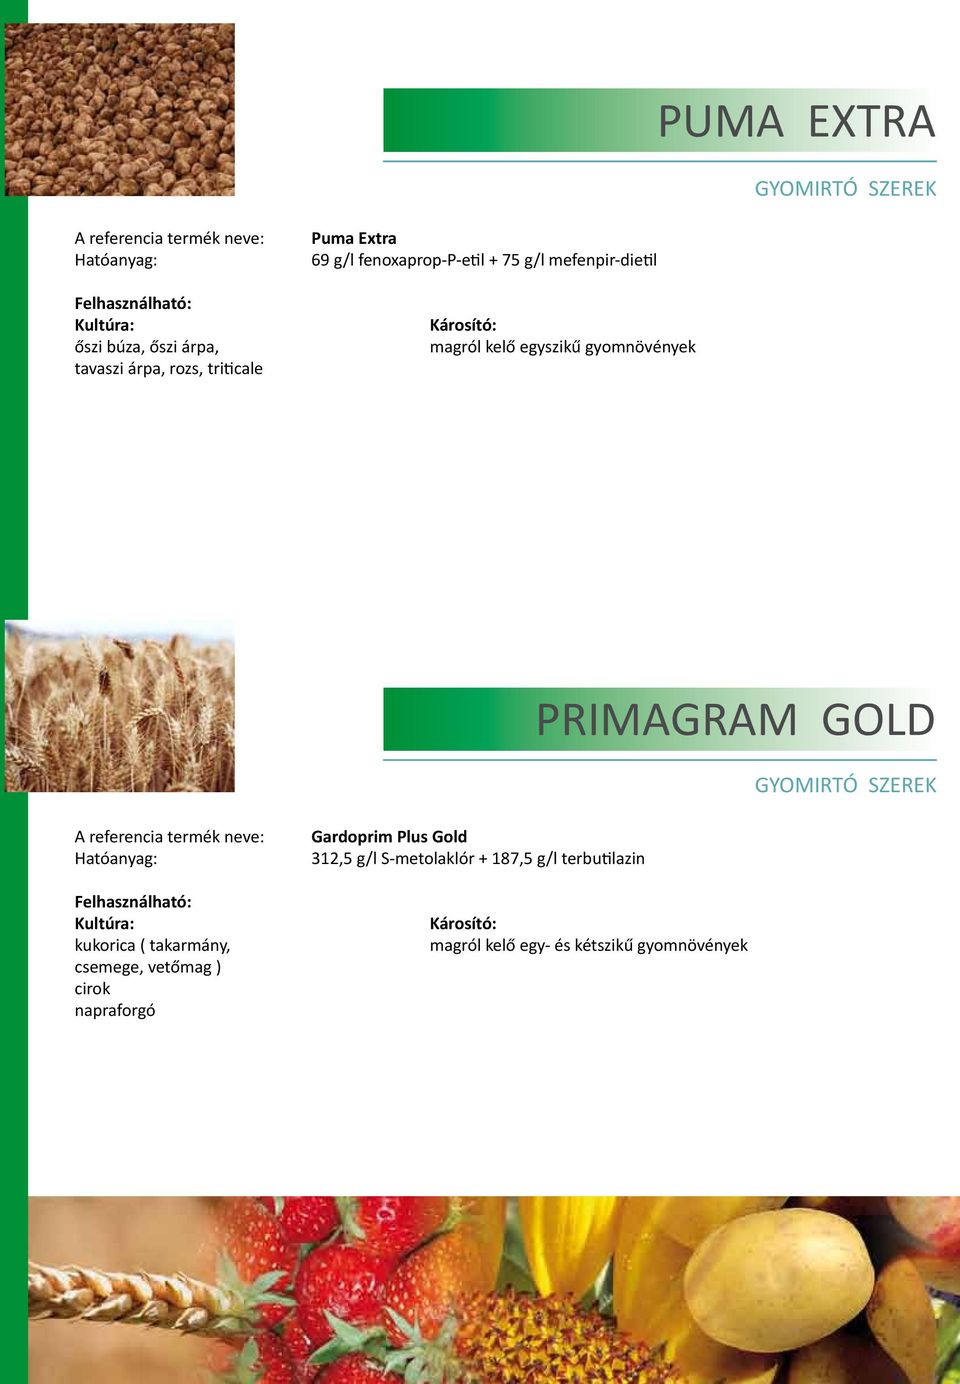 PRIMAGRAM GOLD kukorica ( takarmány, csemege, vetőmag ) cirok napraforgó Gardoprim